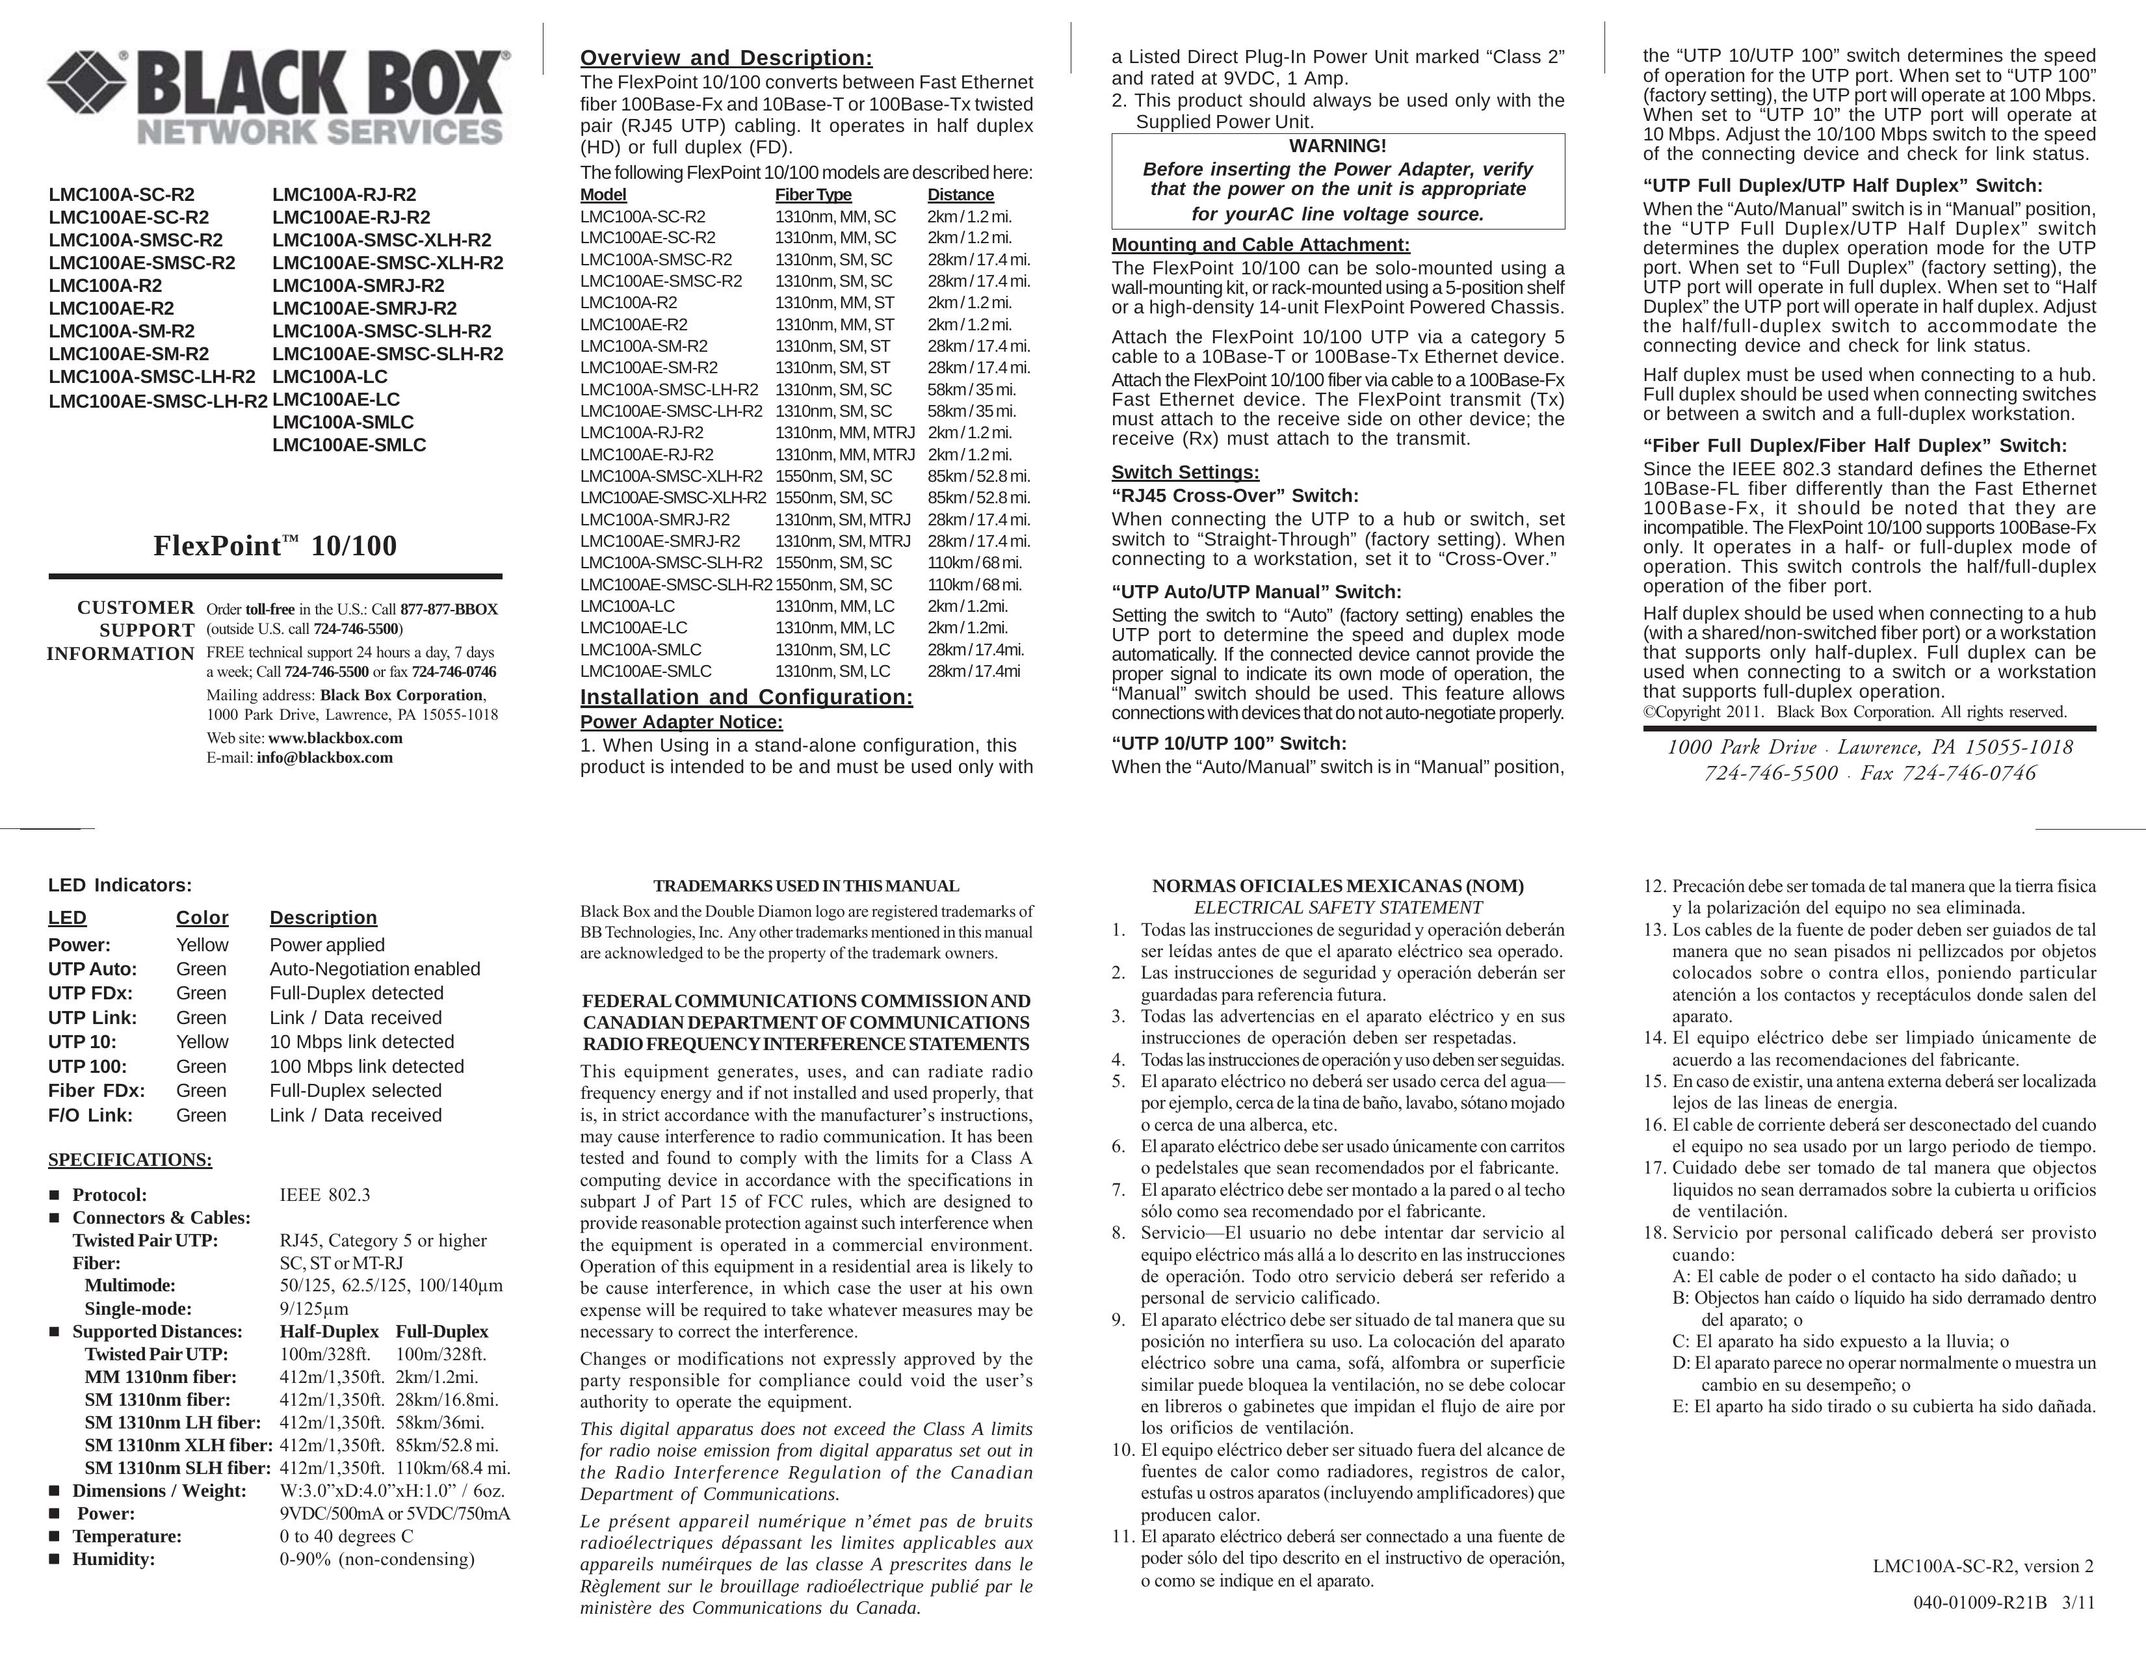 Black Box LMC100A-SC-R2 Network Cables User Manual